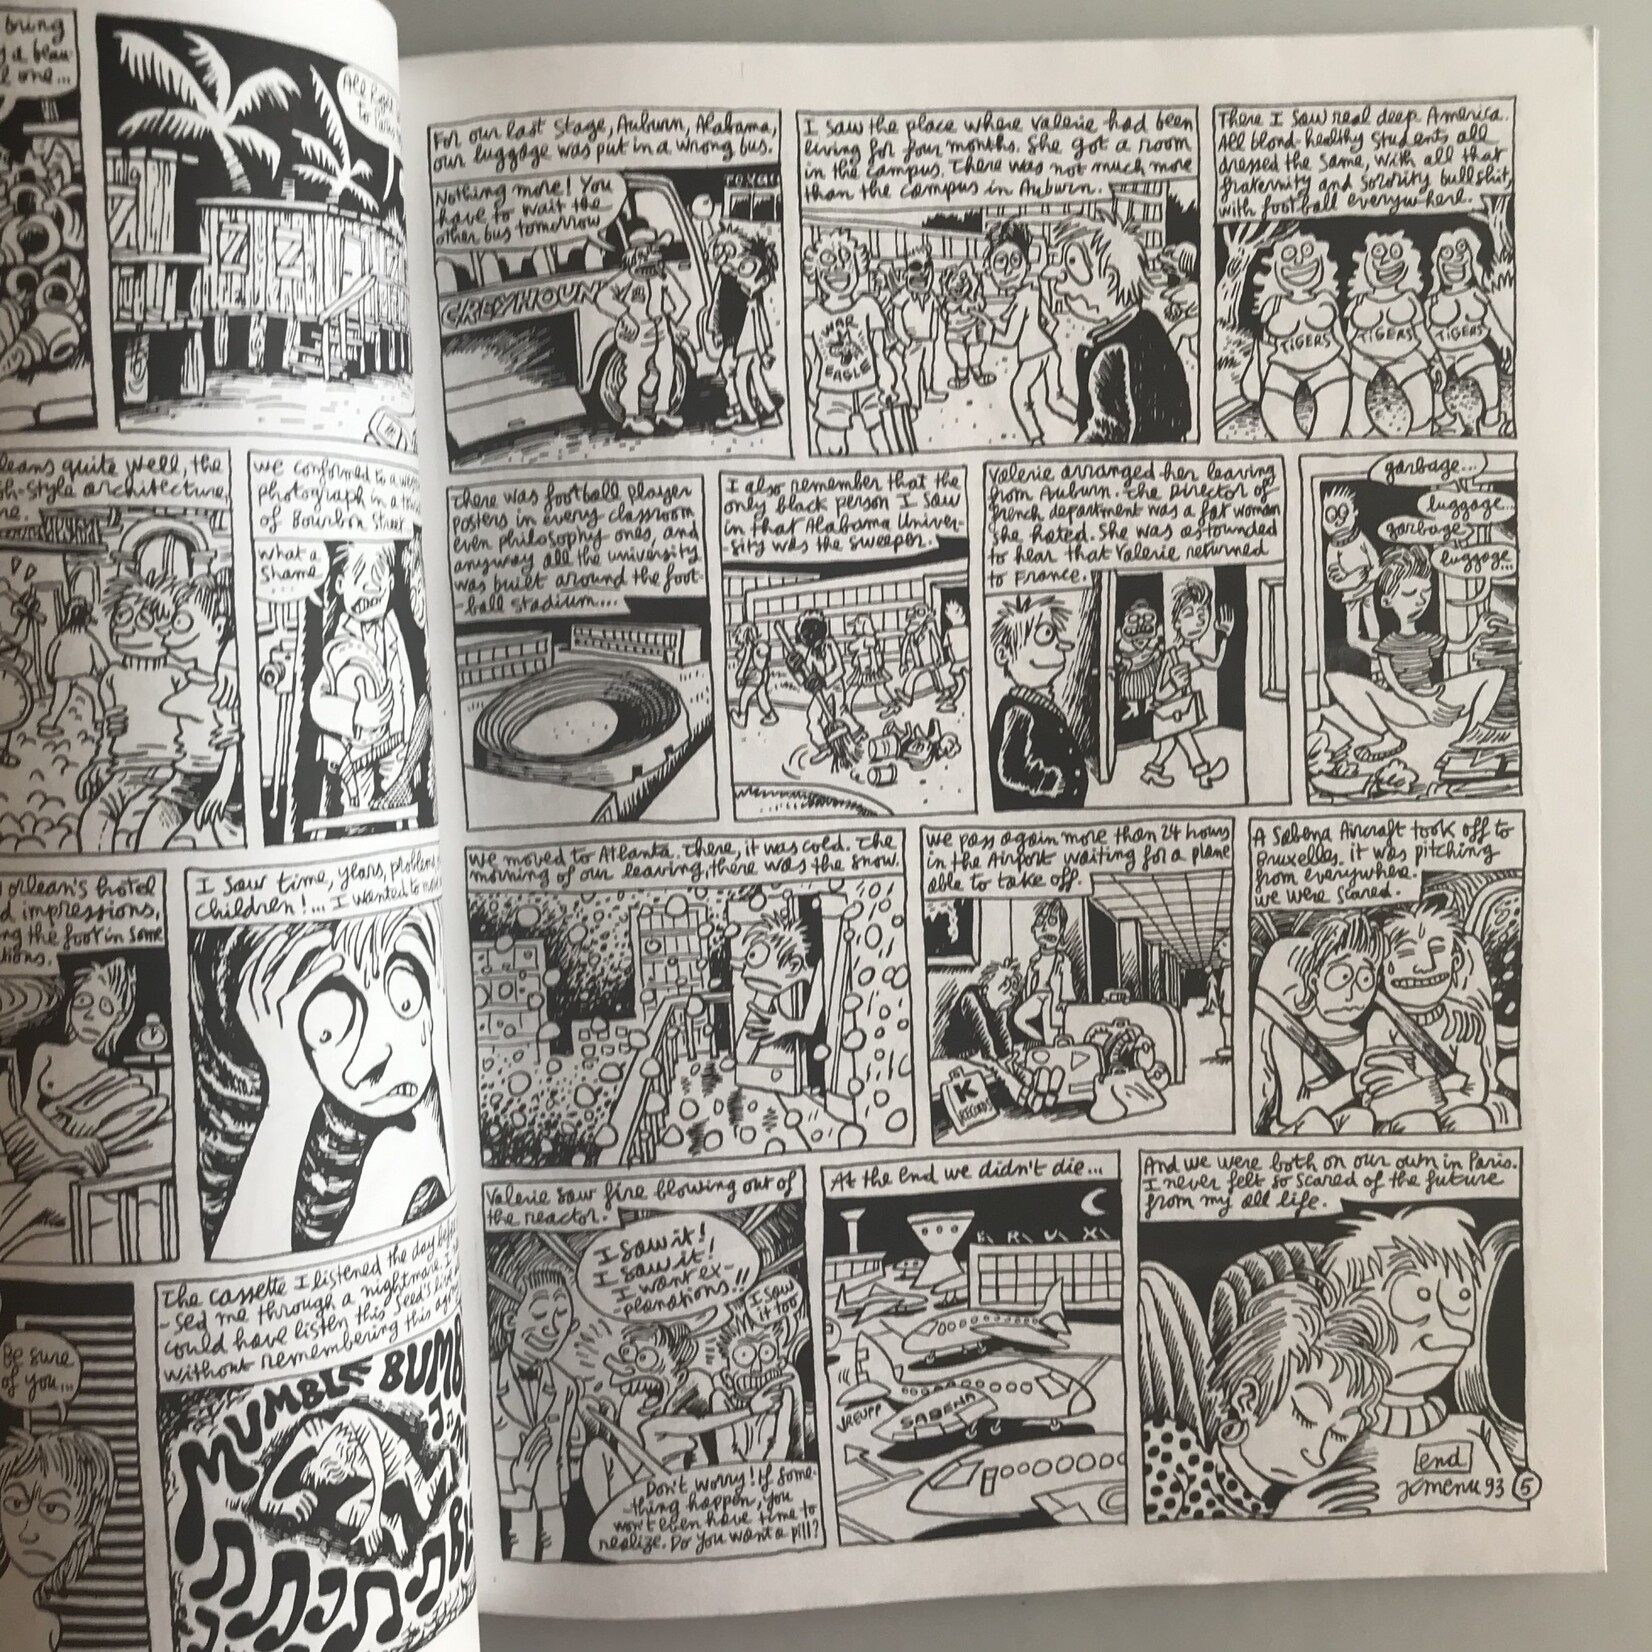 Weirdo - Vol. 1 #28 Summer 1993 - Comic Book